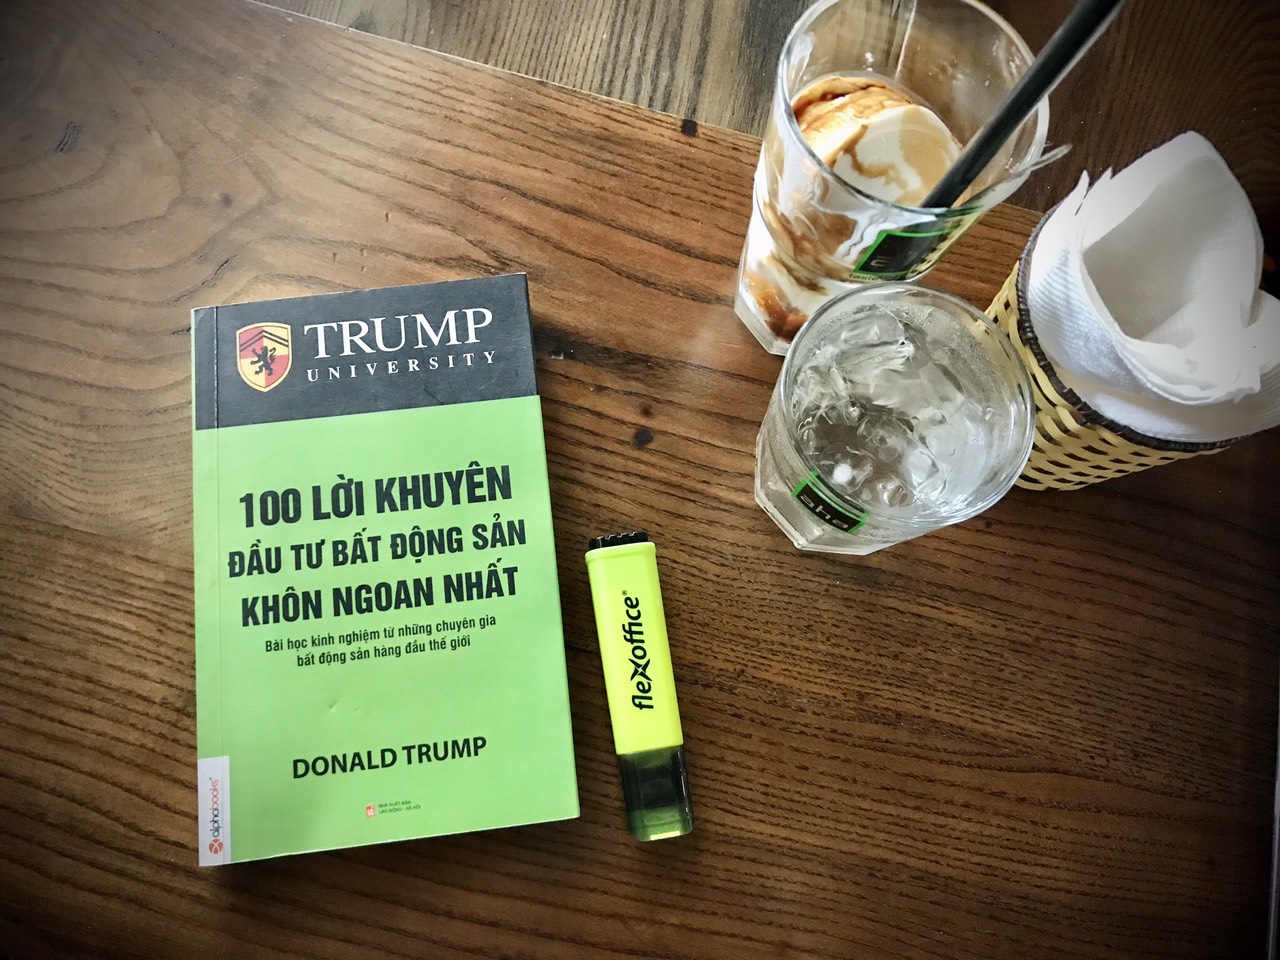 100 Loi Khuyen Dau Tu Bat Dong San Khon Ngoan Nhat Donald Trump